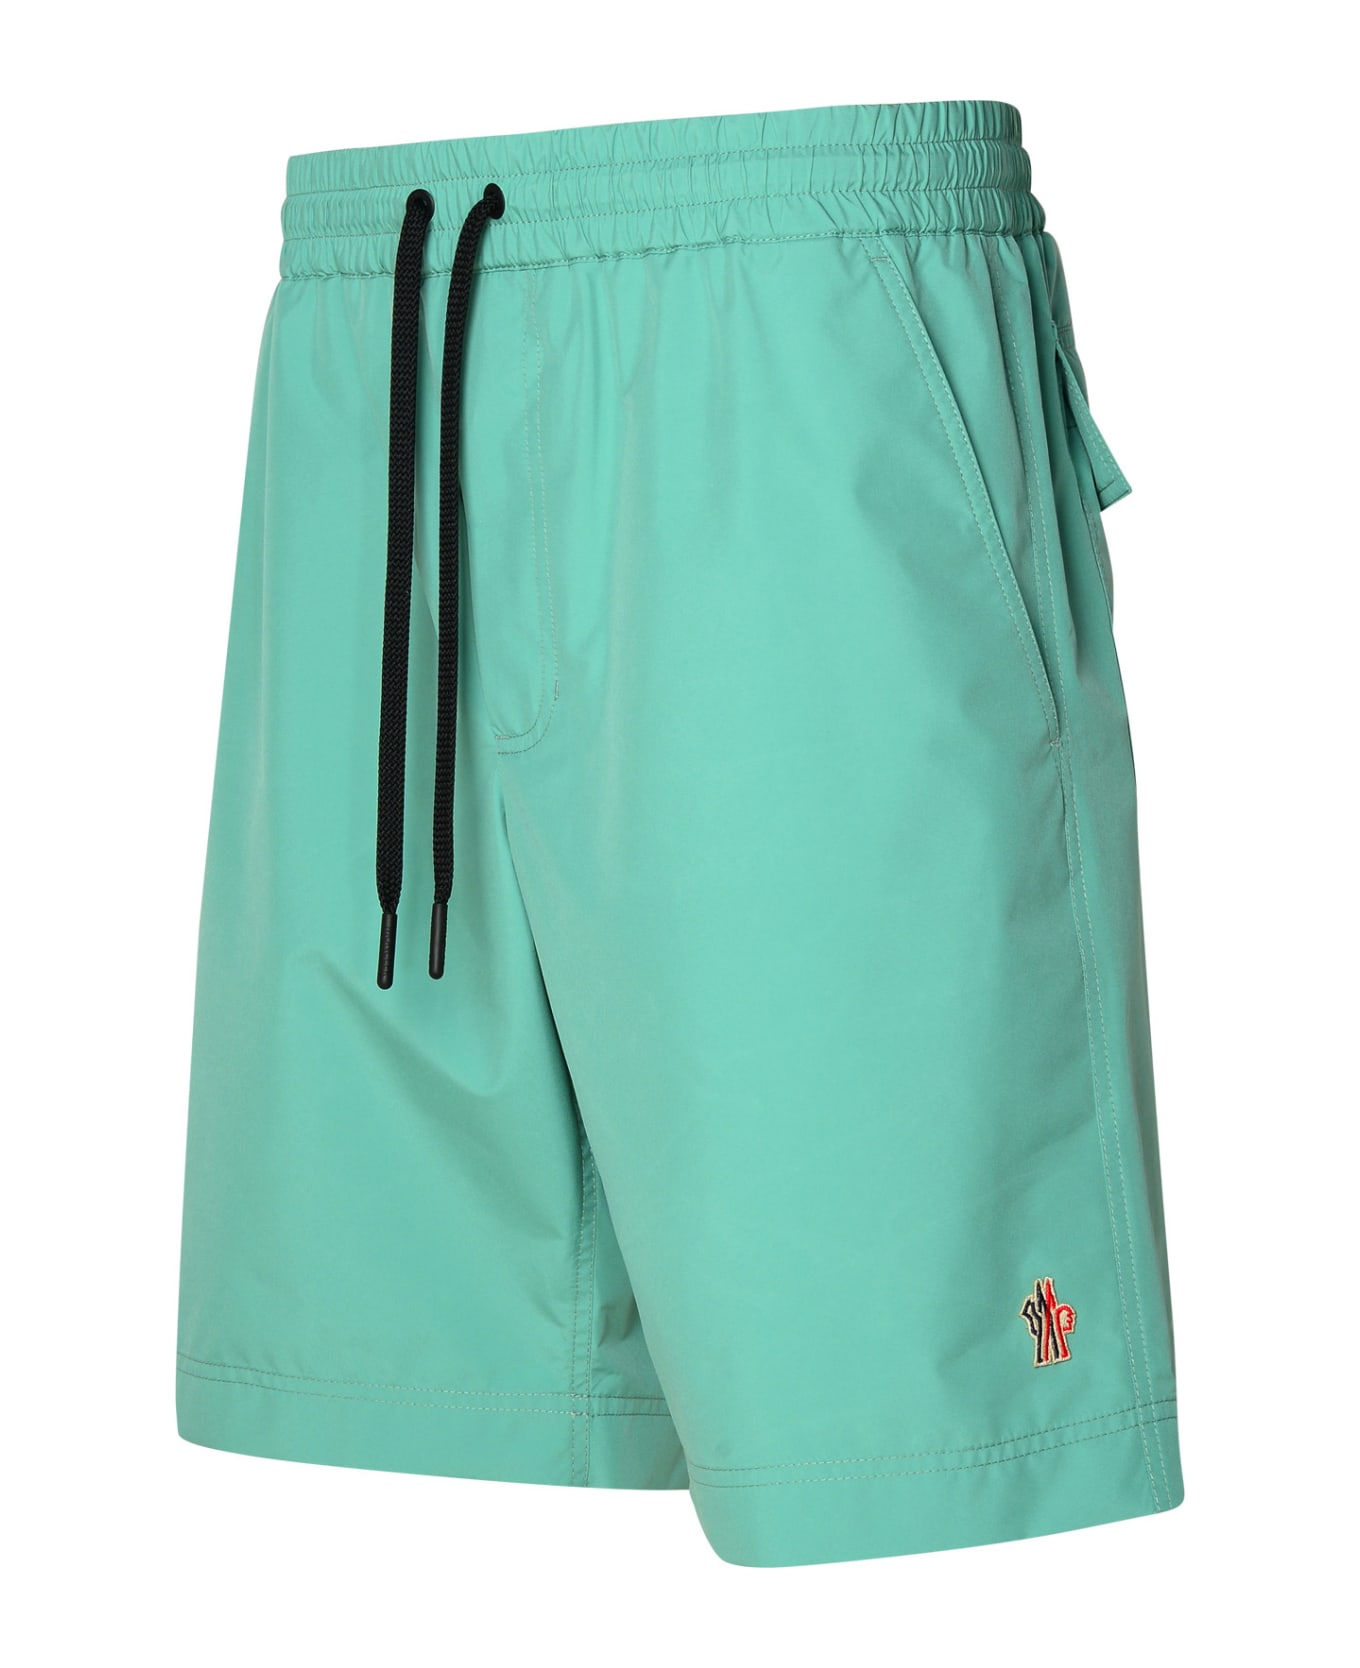 Moncler Grenoble Teal Polyester Swimsuit - Blue ショートパンツ